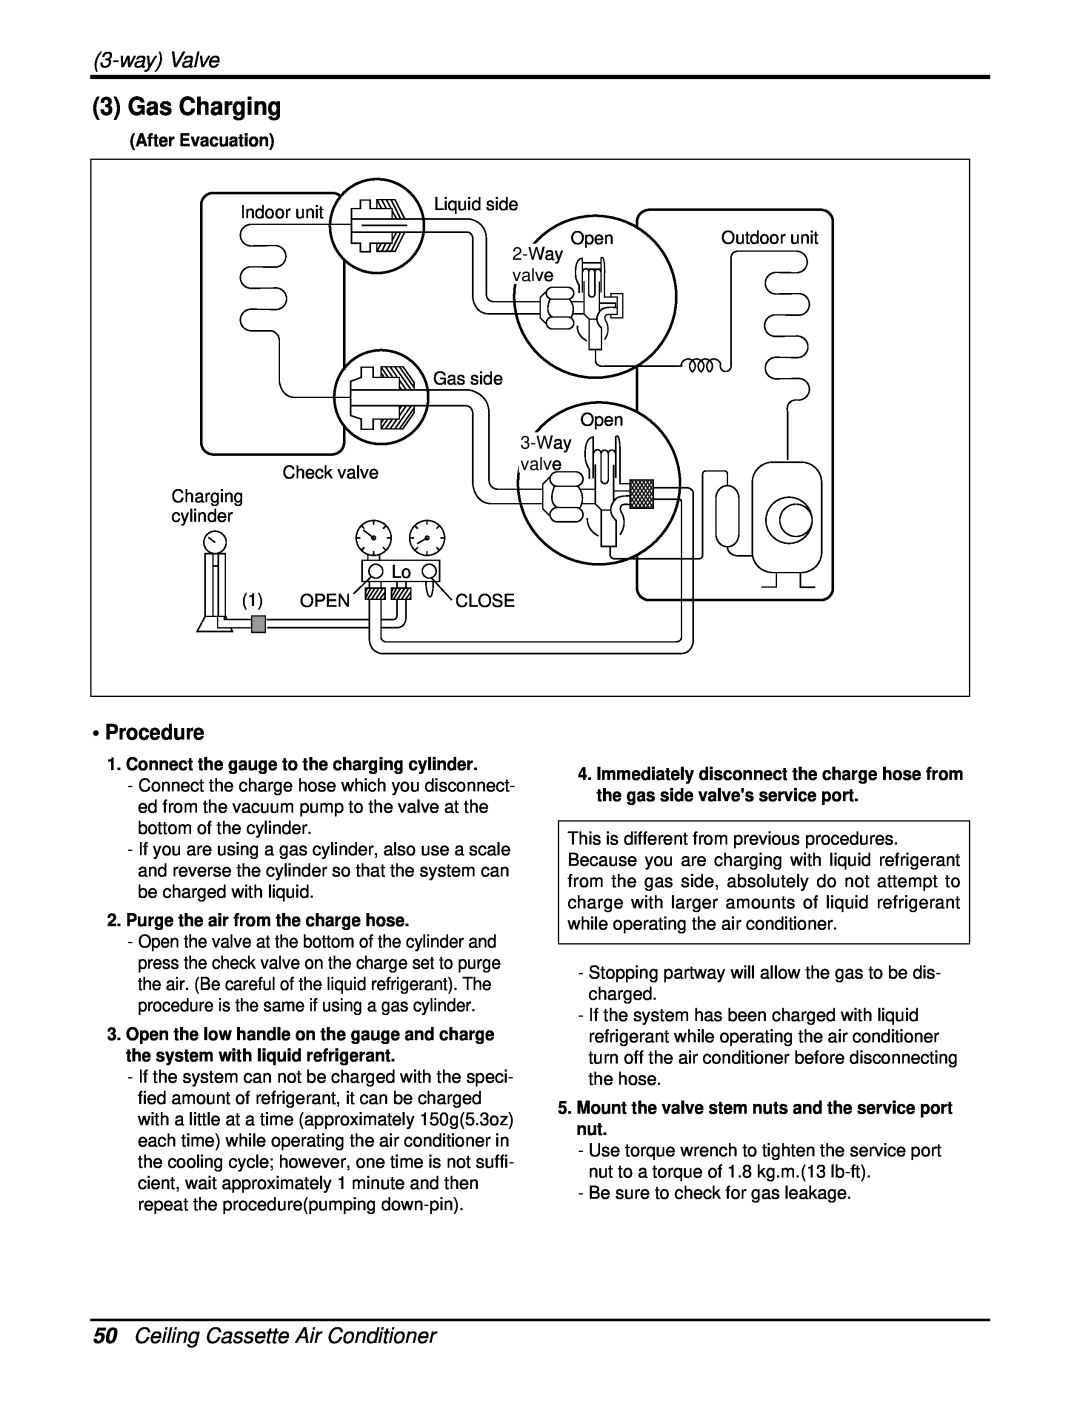 Heat Controller DMC24CA-1, DMC36CA-1 manual Gas Charging, 50Ceiling Cassette Air Conditioner, wayValve, Procedure 